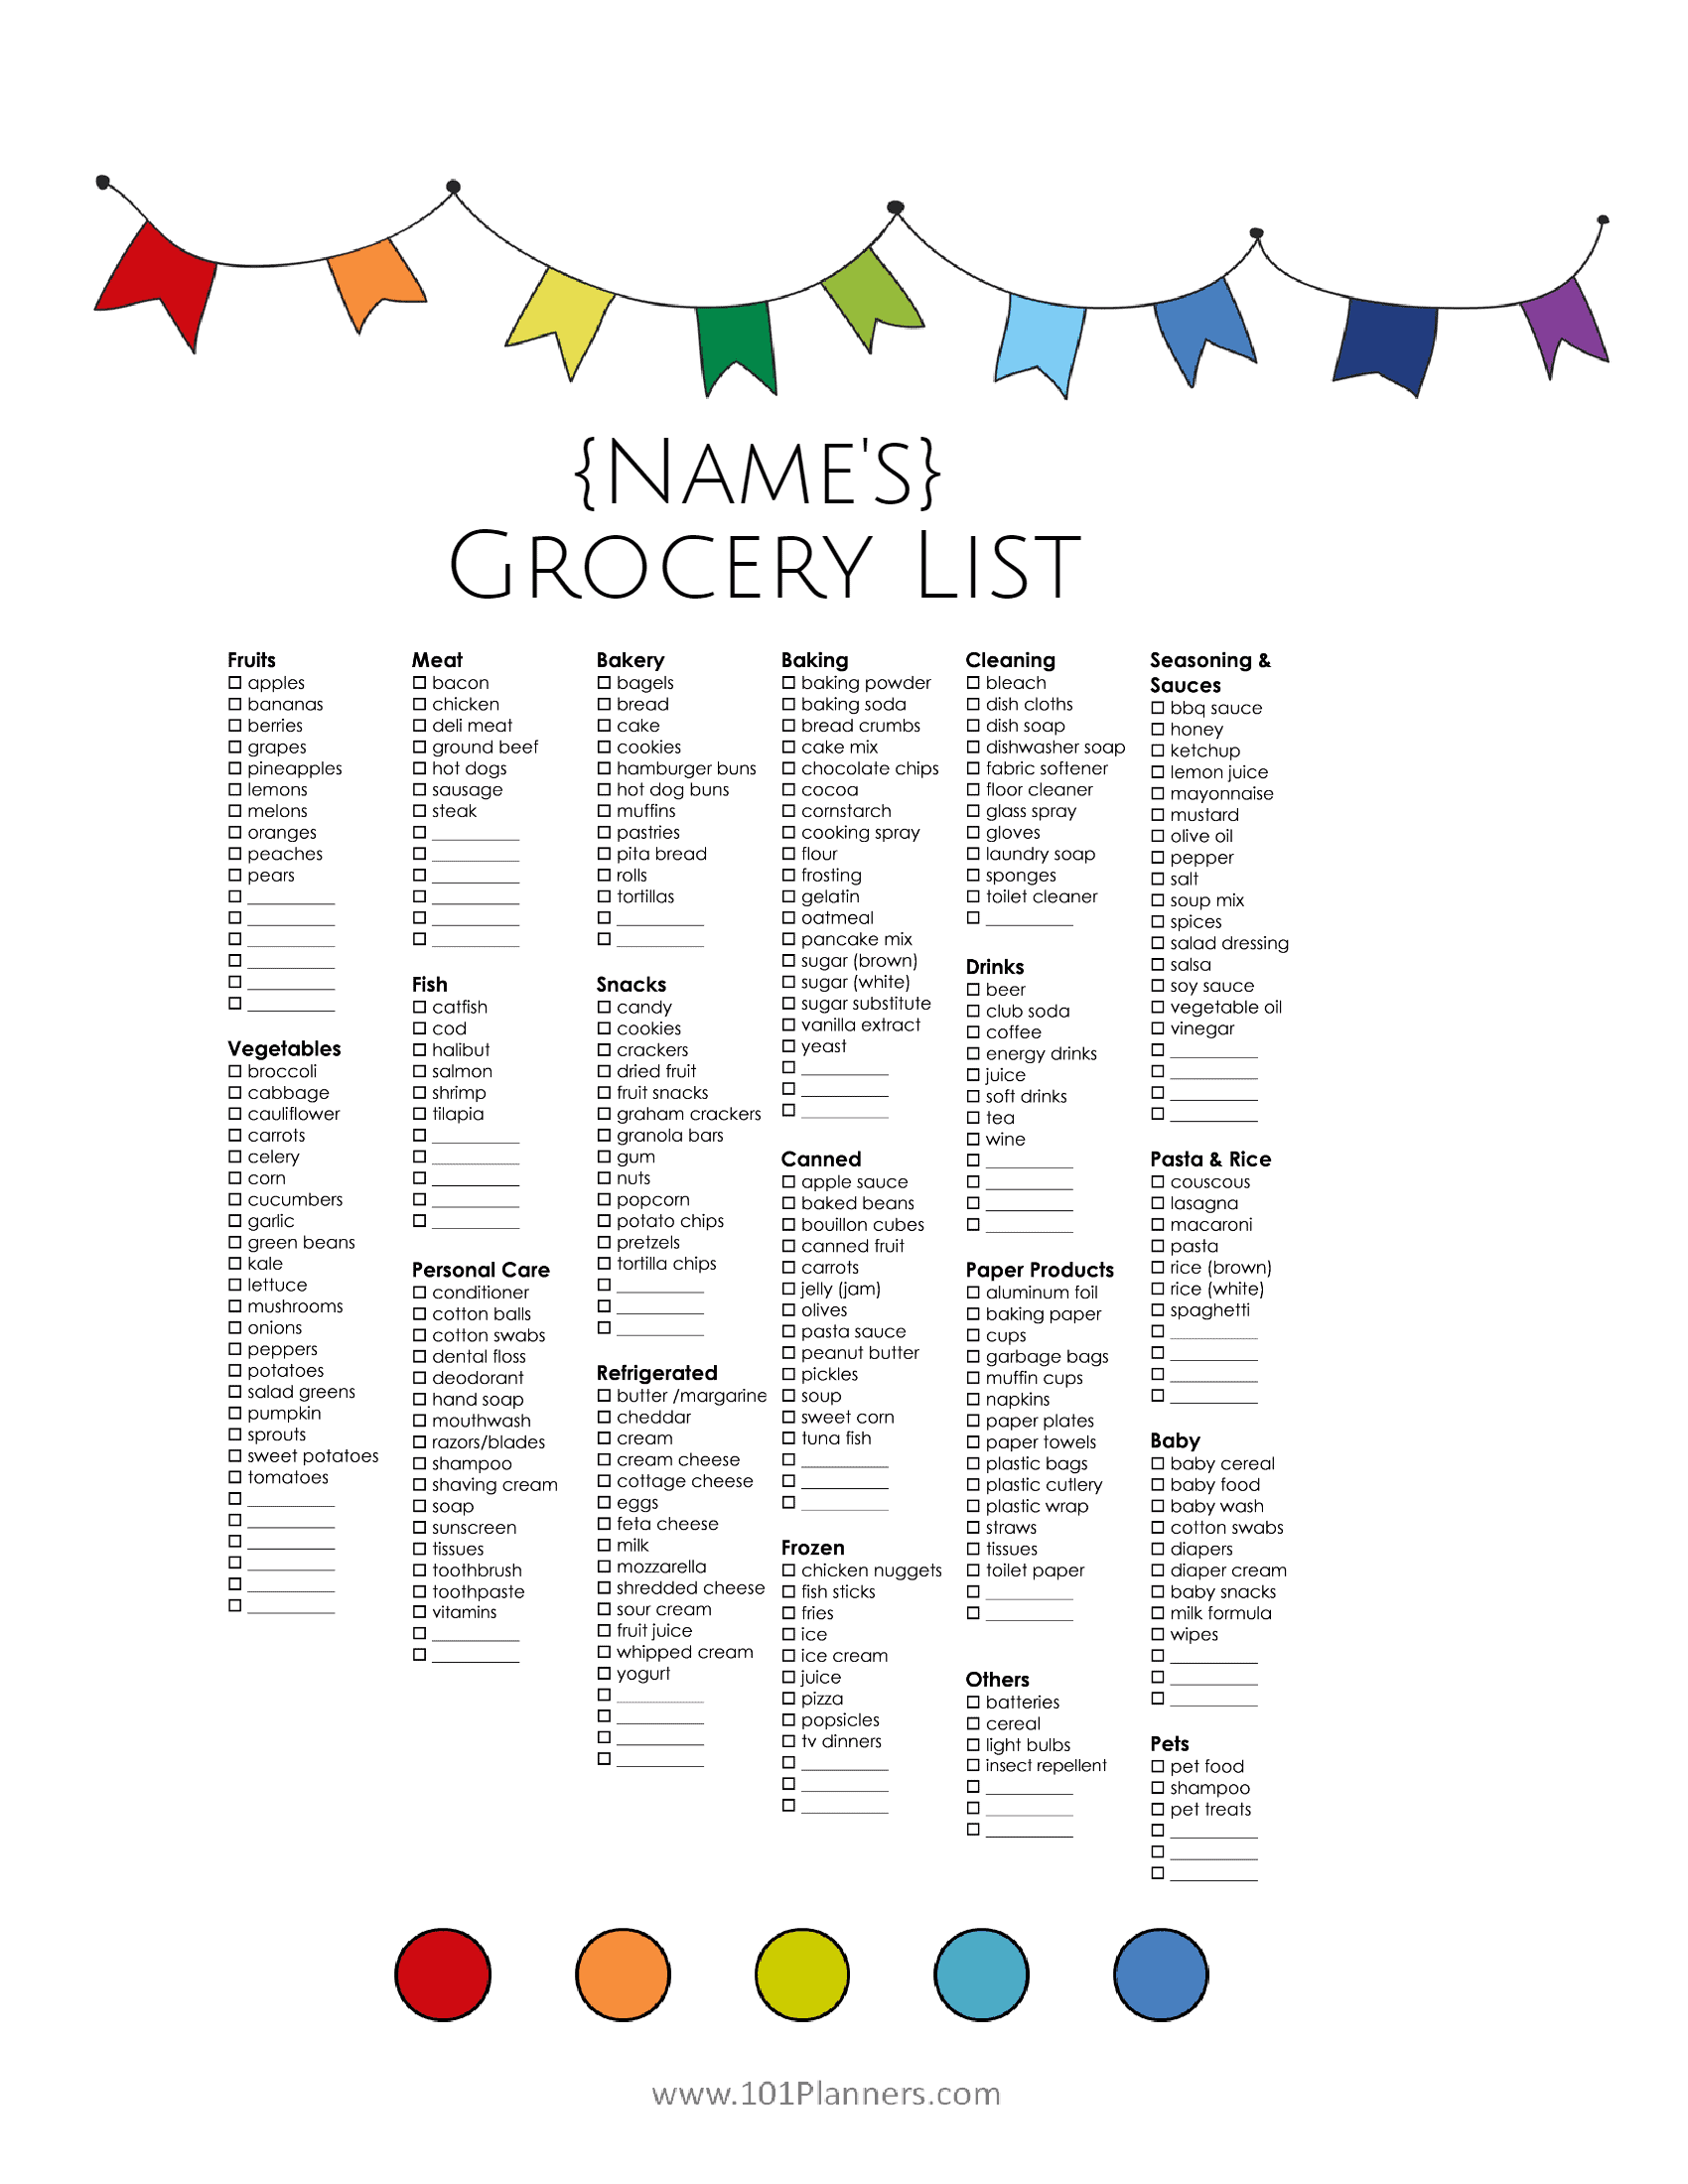 Grocery List Template | Free Printable